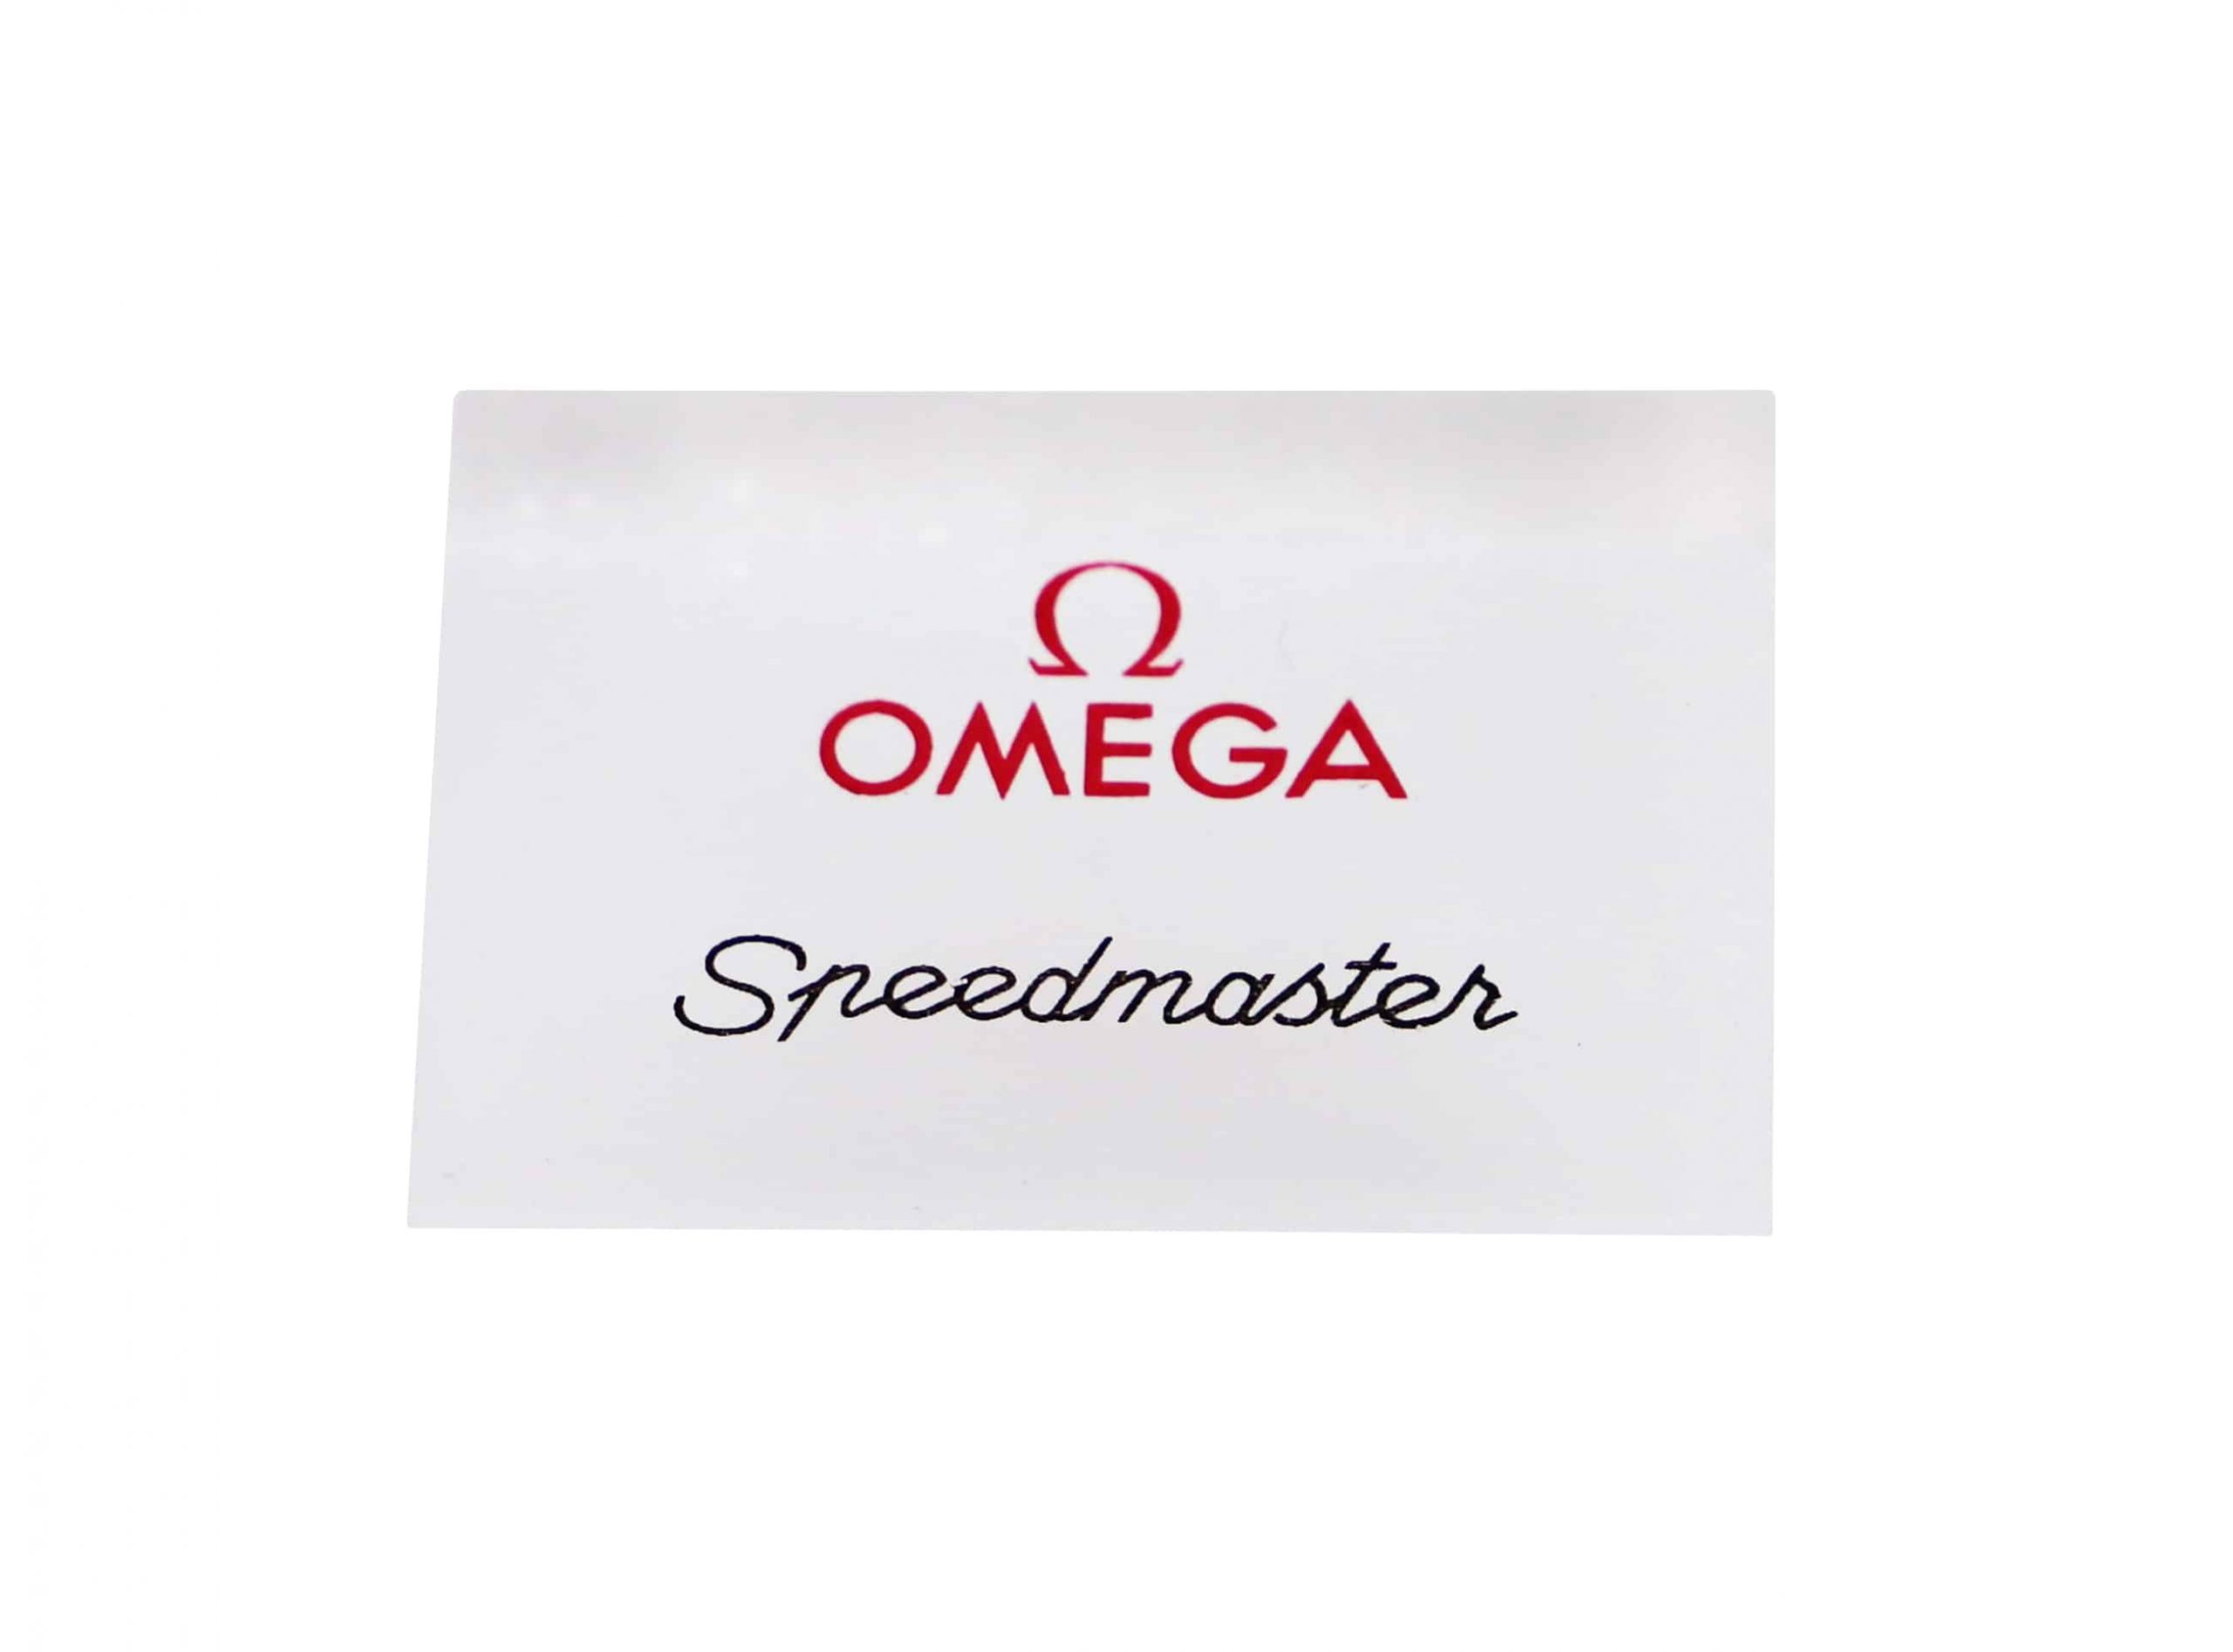 Omega Speedmaster Display Sign - Rare Watch Parts